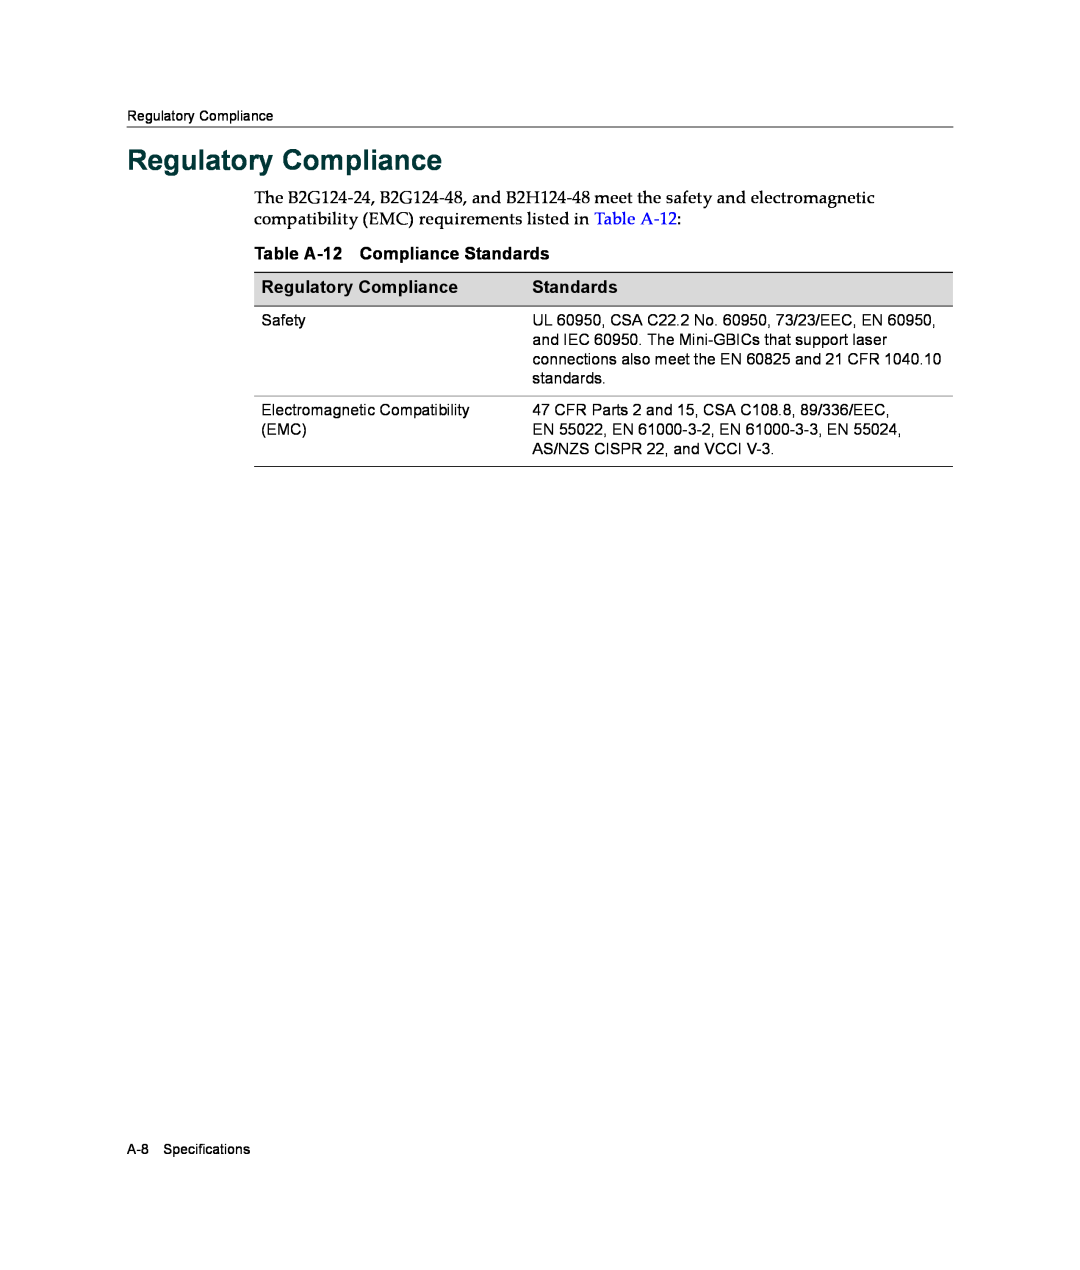 Enterasys Networks B2G124-24 manual Regulatory Compliance, Table A-12 Compliance Standards 